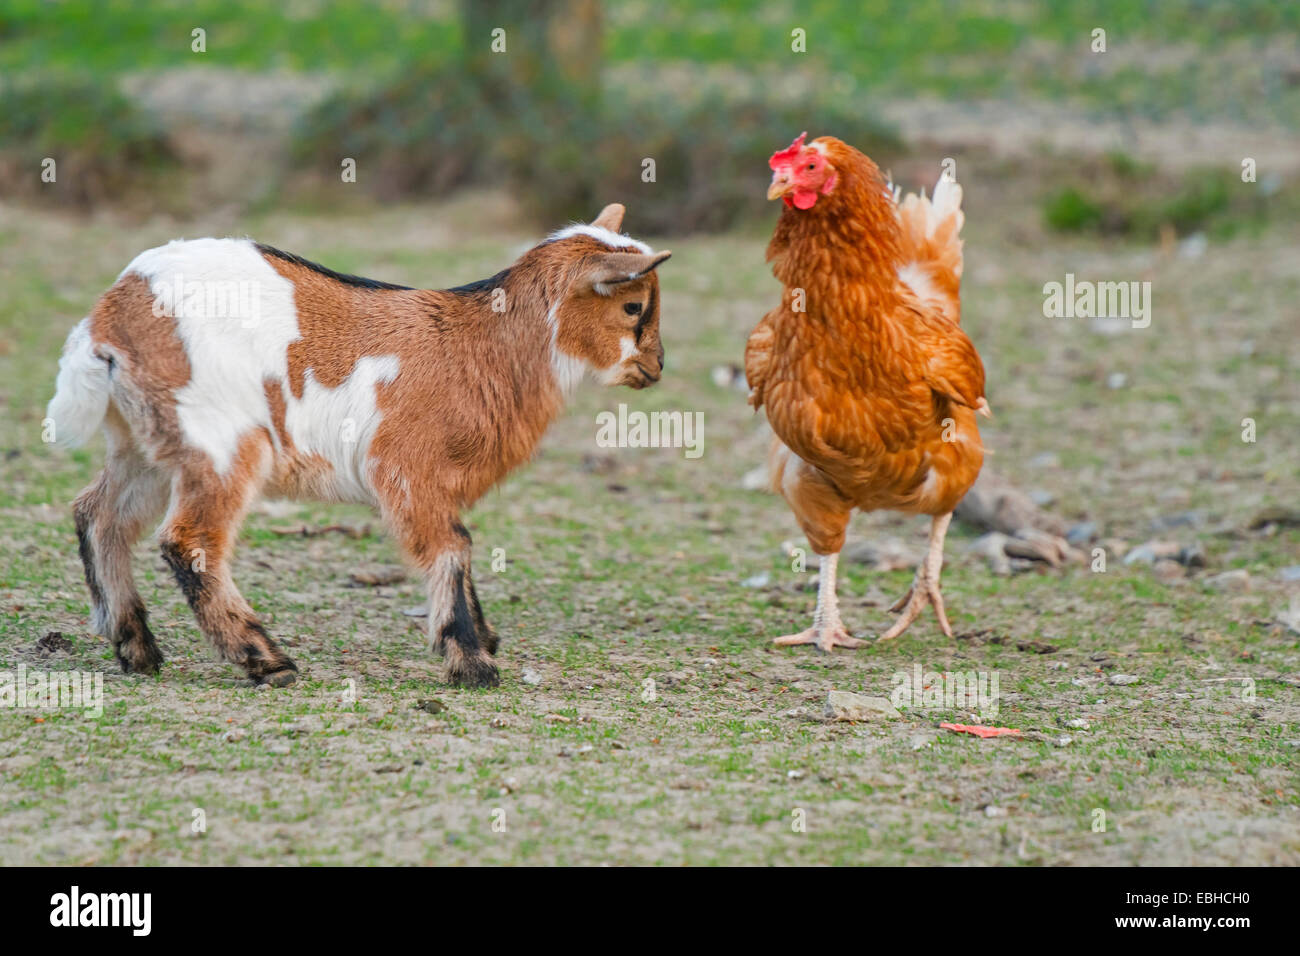 domestic goat (Capra hircus, Capra aegagrus f. hircus), goat kid approching a hen, Germany, North Rhine-Westphalia Stock Photo